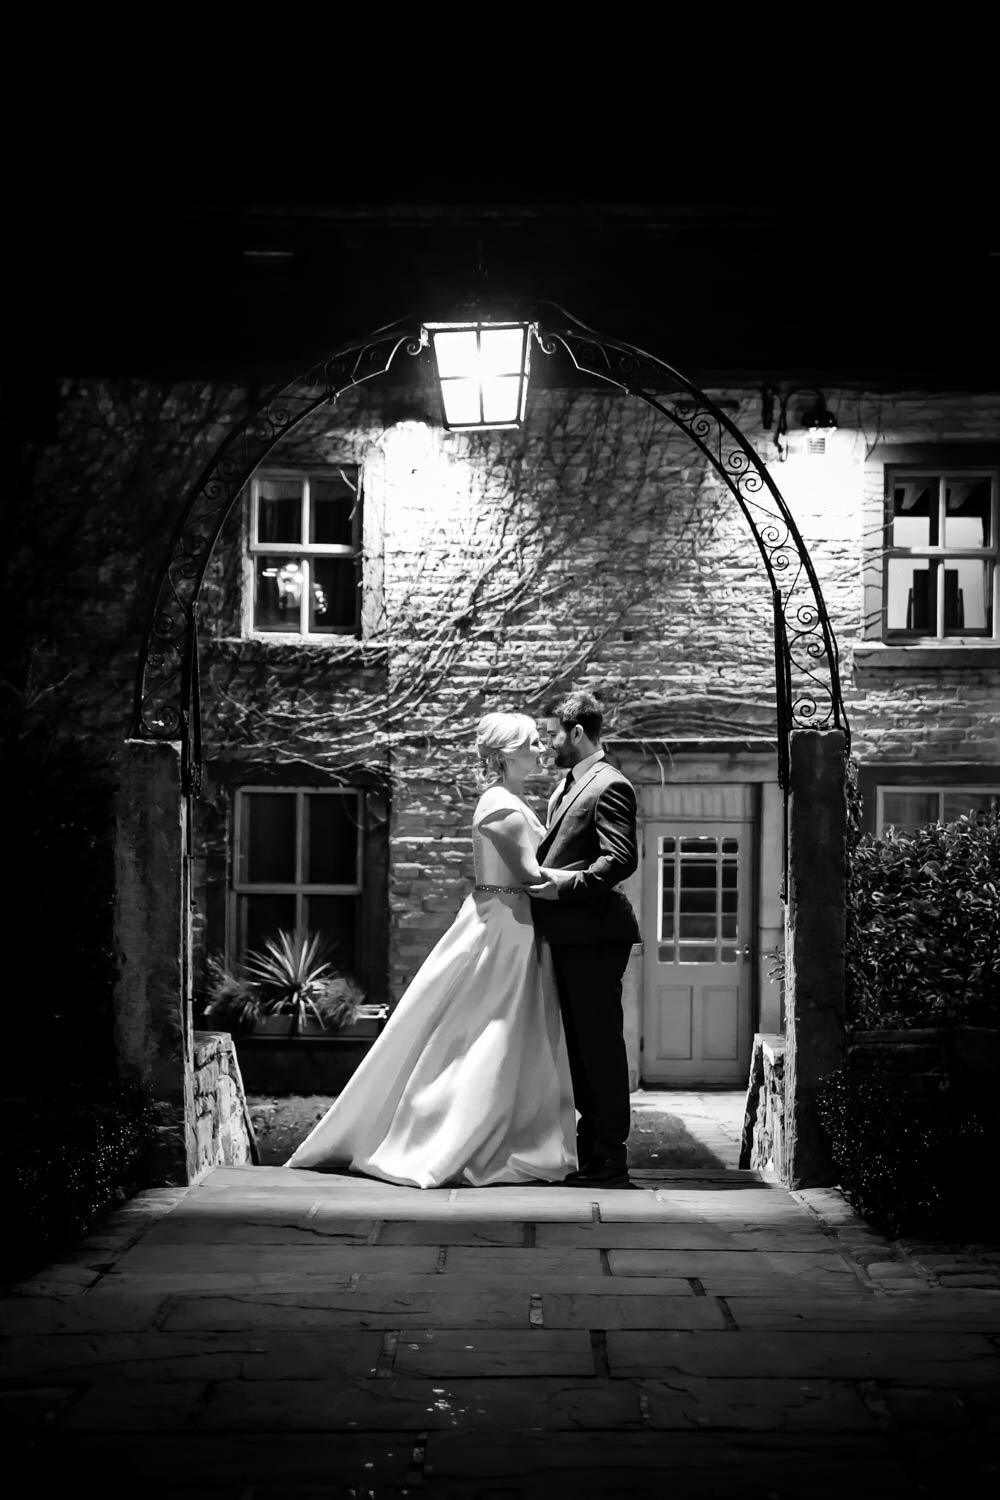 fleece-inn-wedding-photography-ripponden-halifax-west-yorkshire